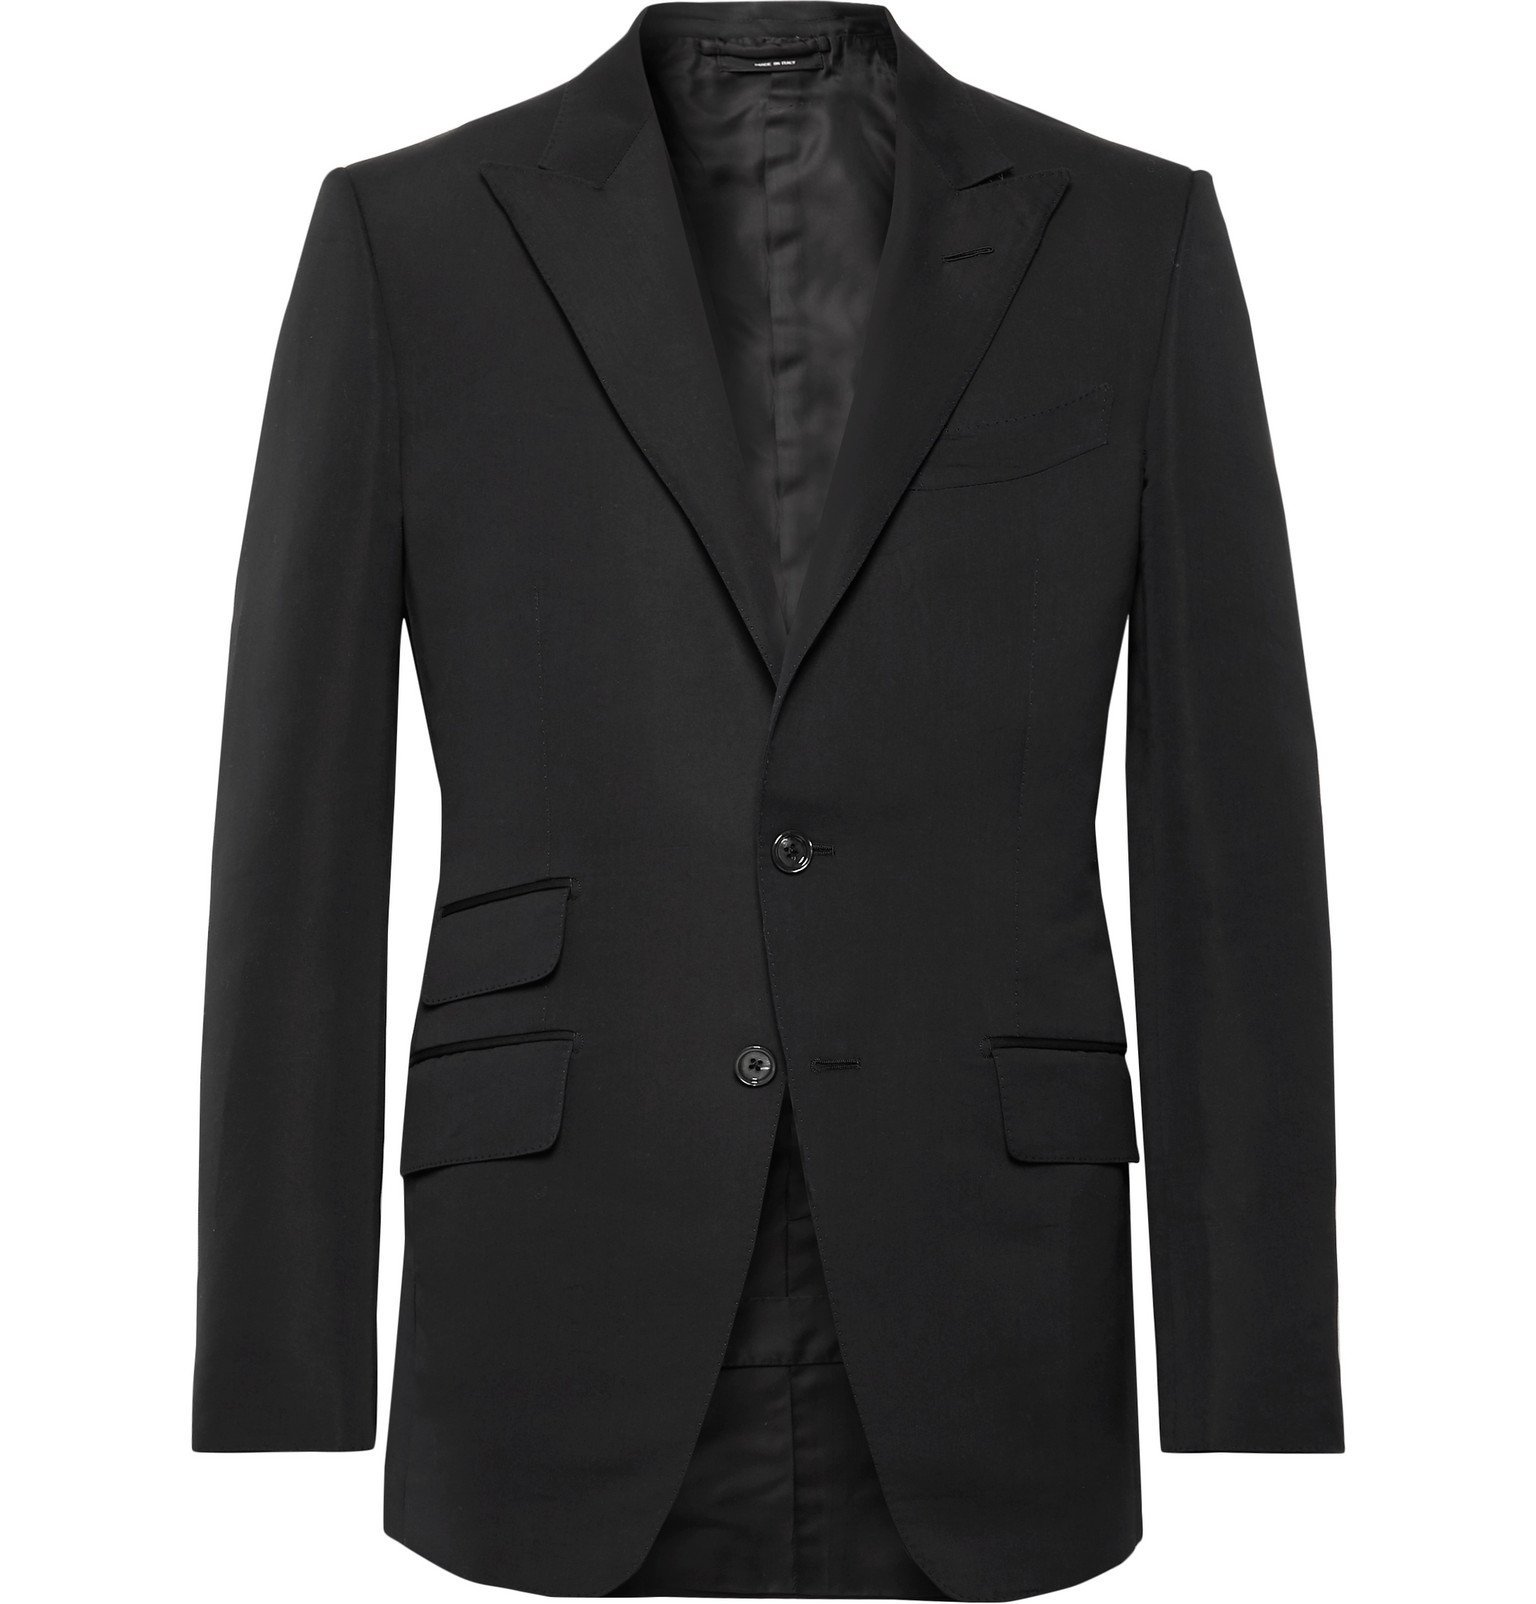 TOM FORD - Black O'Connor Slim-Fit Cotton and Silk-Blend Suit Jacket - Black  TOM FORD